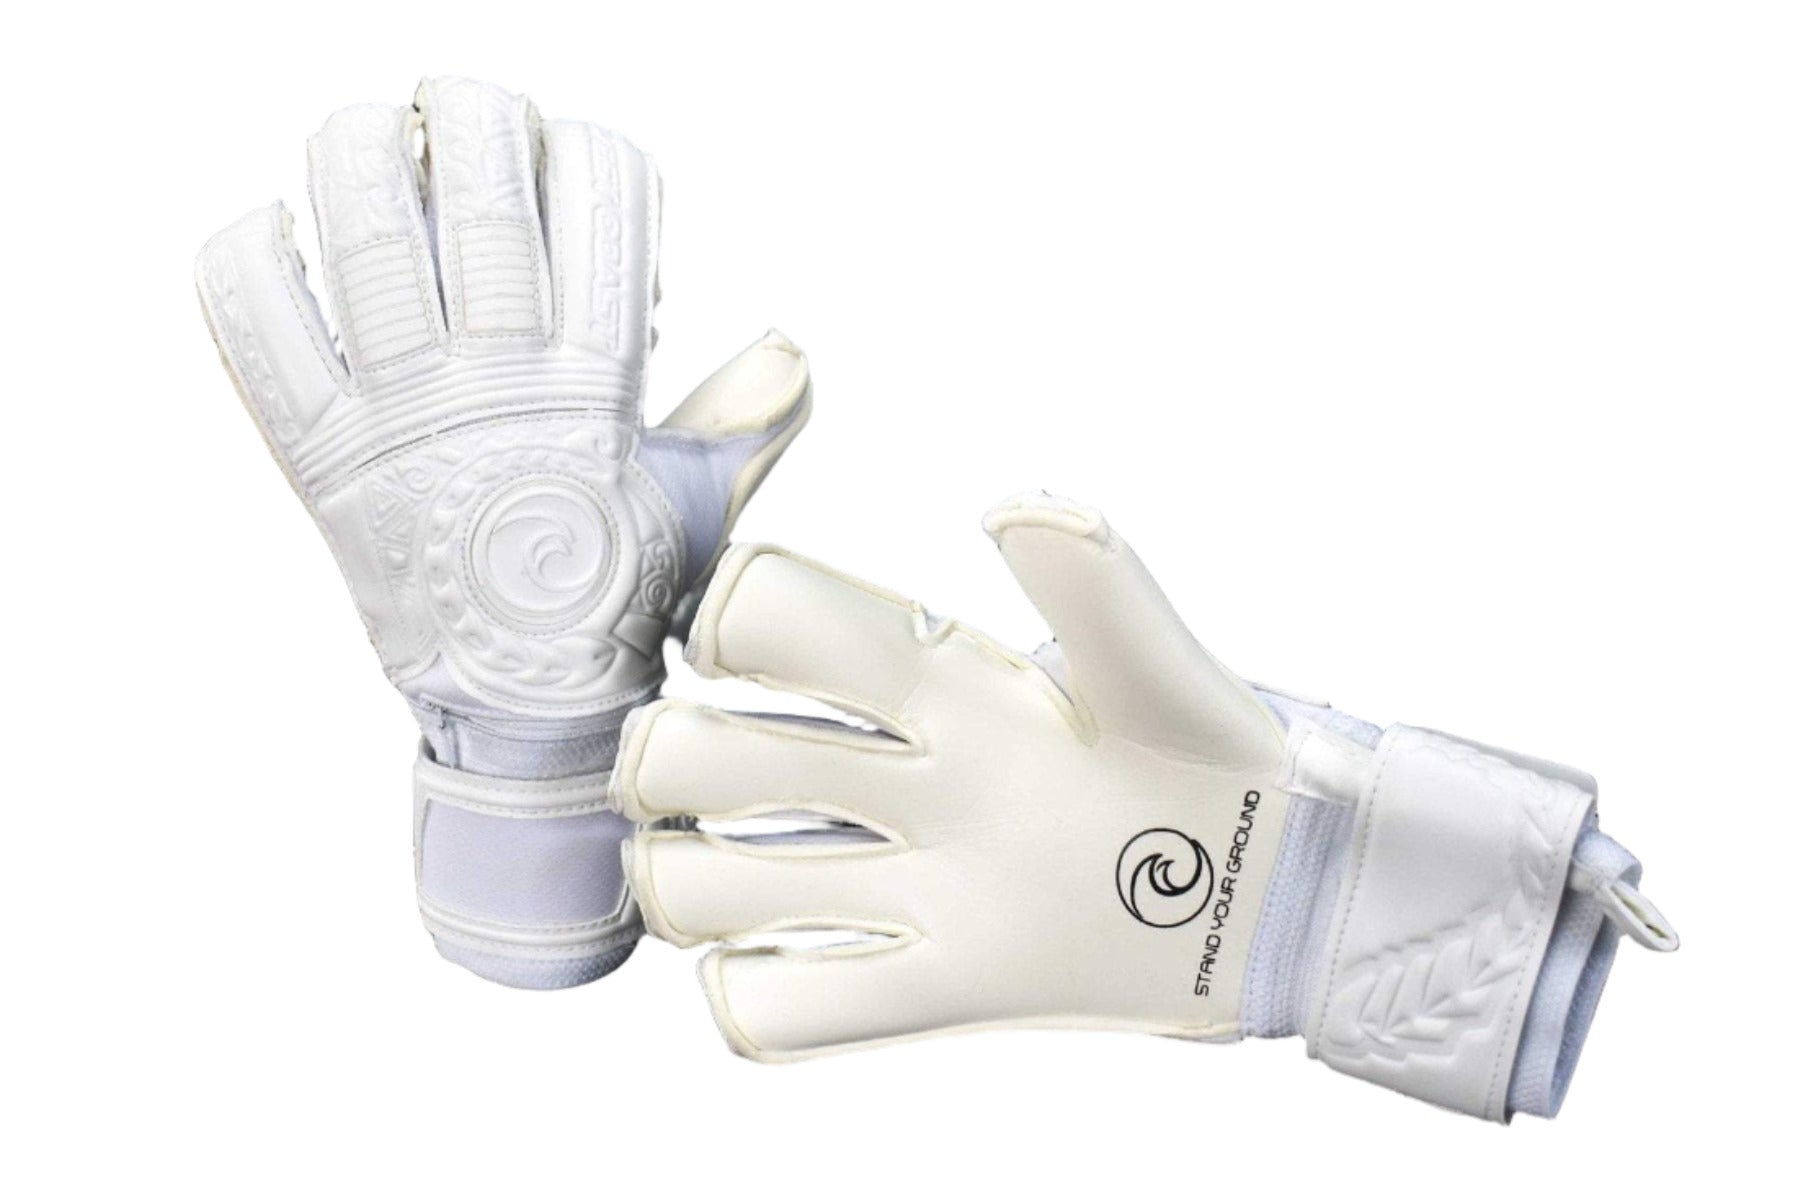 West Coast Kona Pura Gk Gloves - White